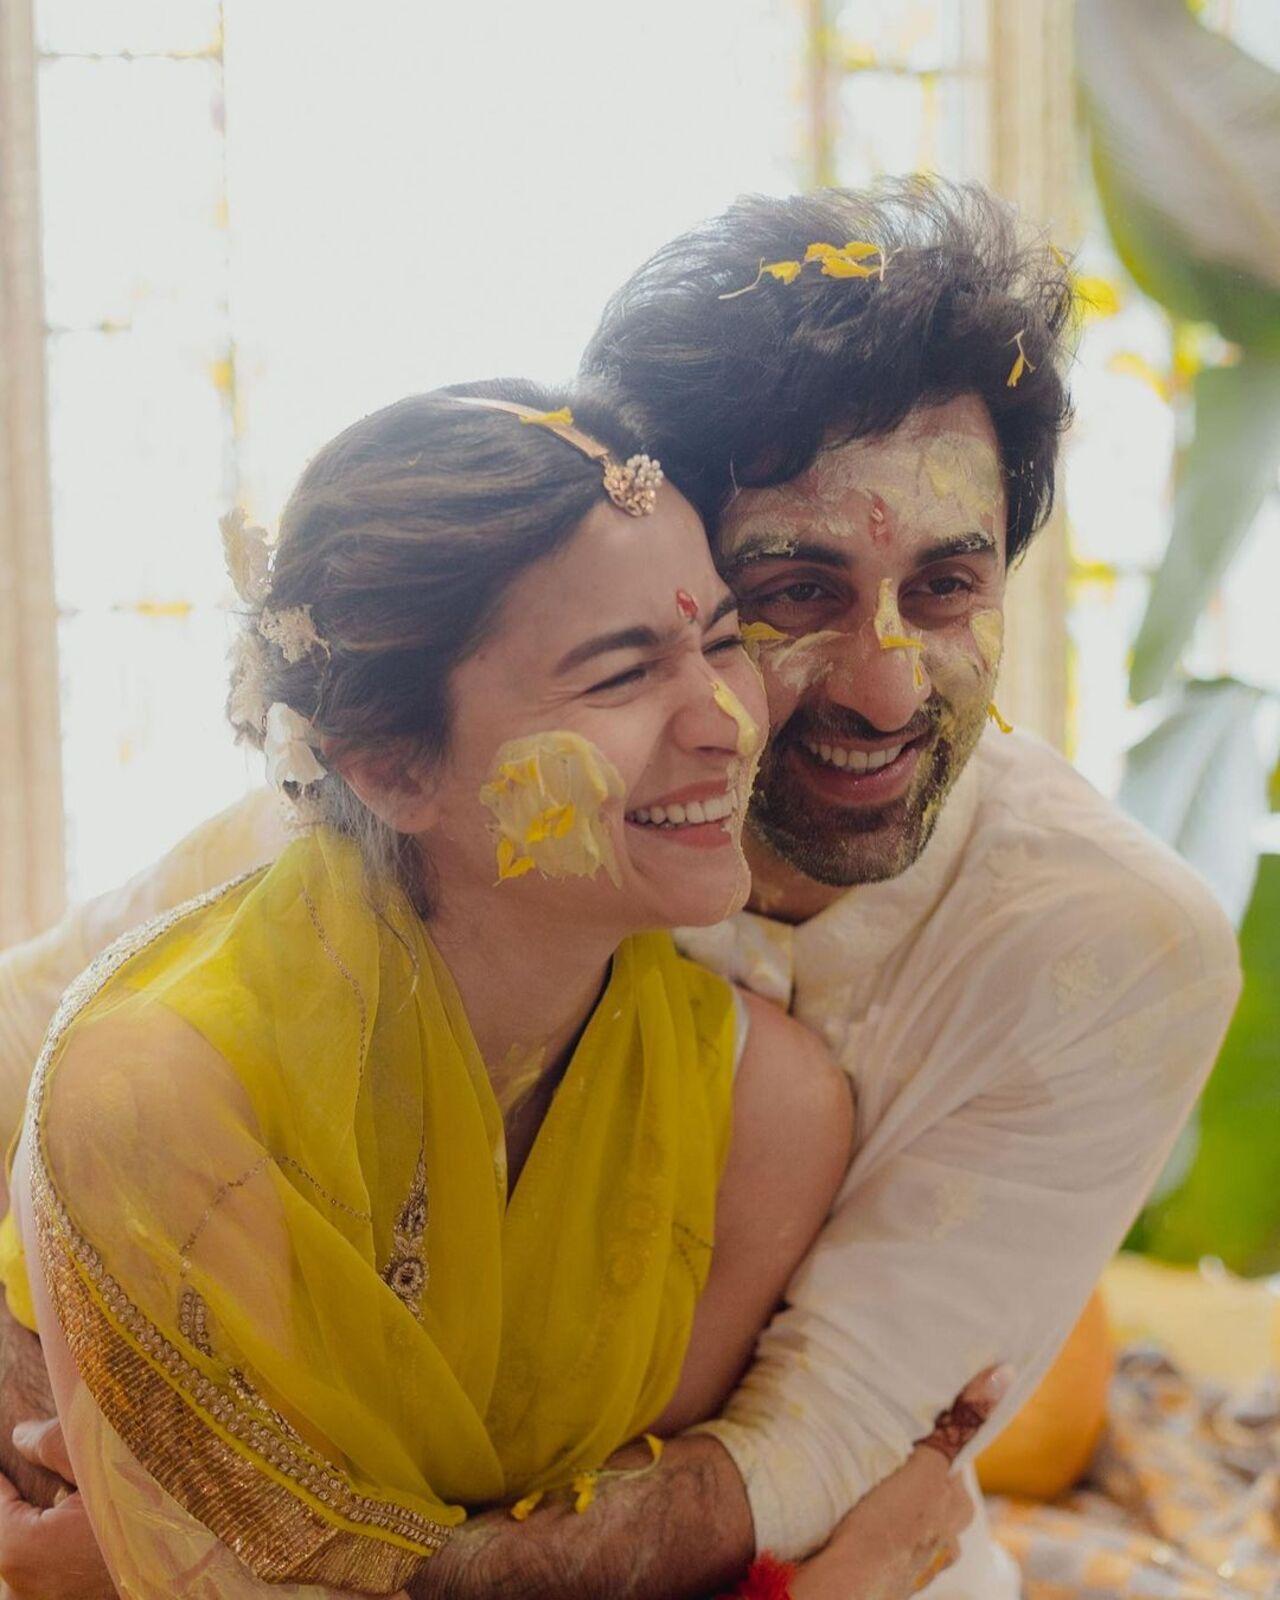 Ranbir Kapoor gives his wife Alia Bhatt a tight hug during their wedding festivities